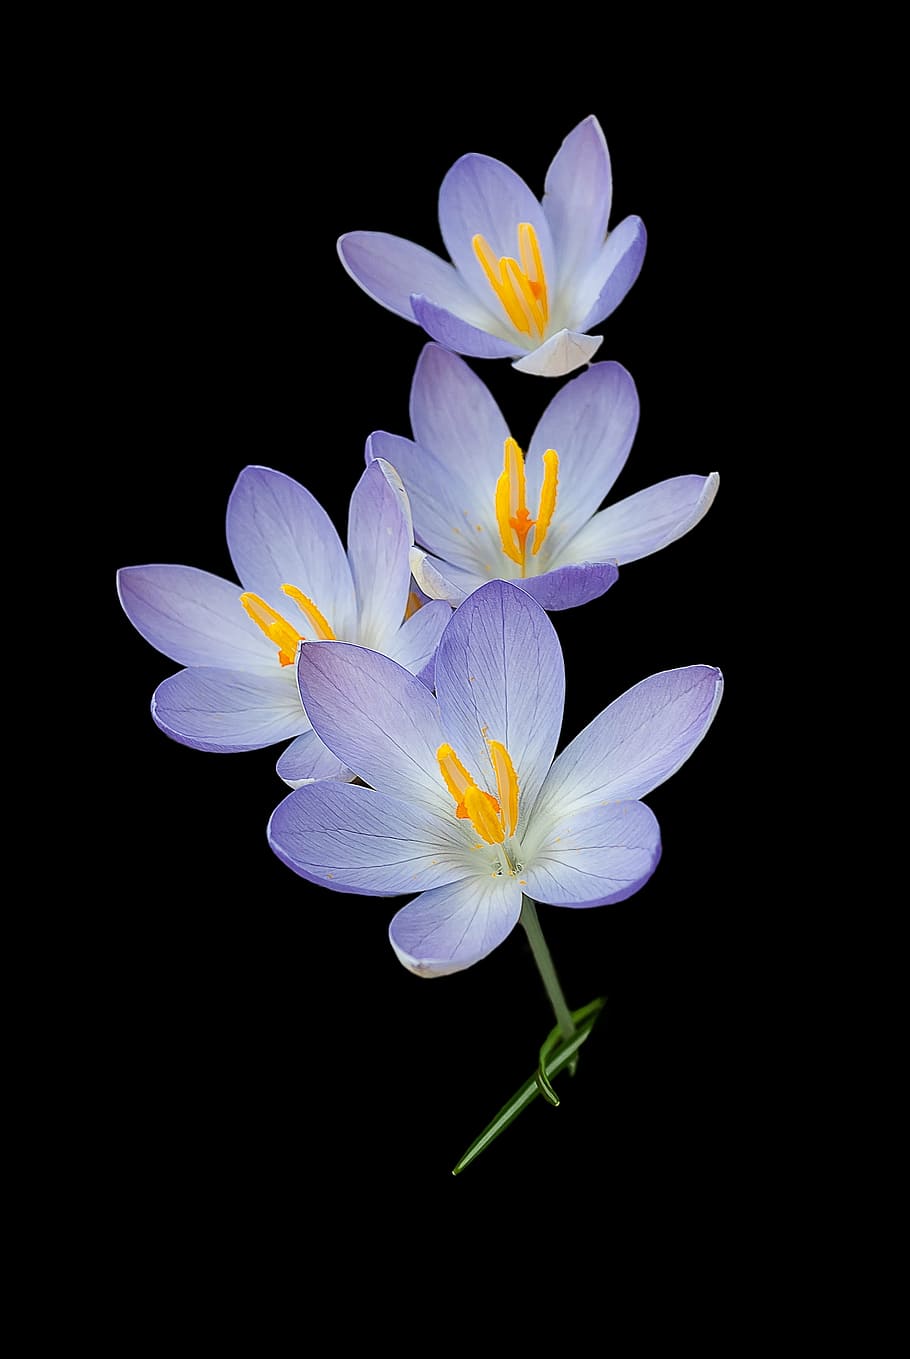 purple, white, petaled flowers photo, crocus, nature, background, crocuses, flowers, spring, flower